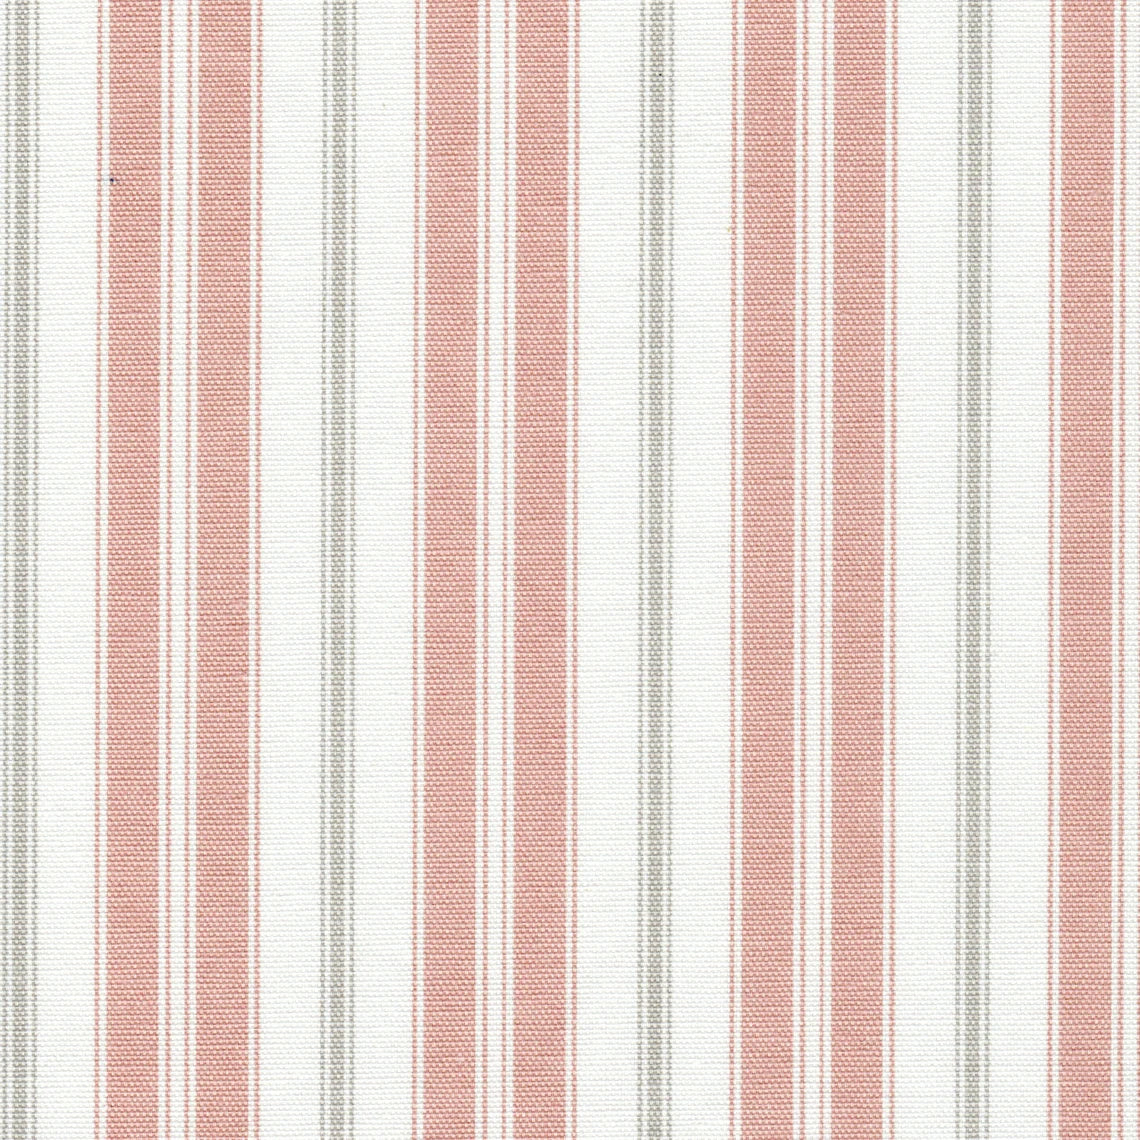 pillow sham in newbury blush stripe- pink, gray, white